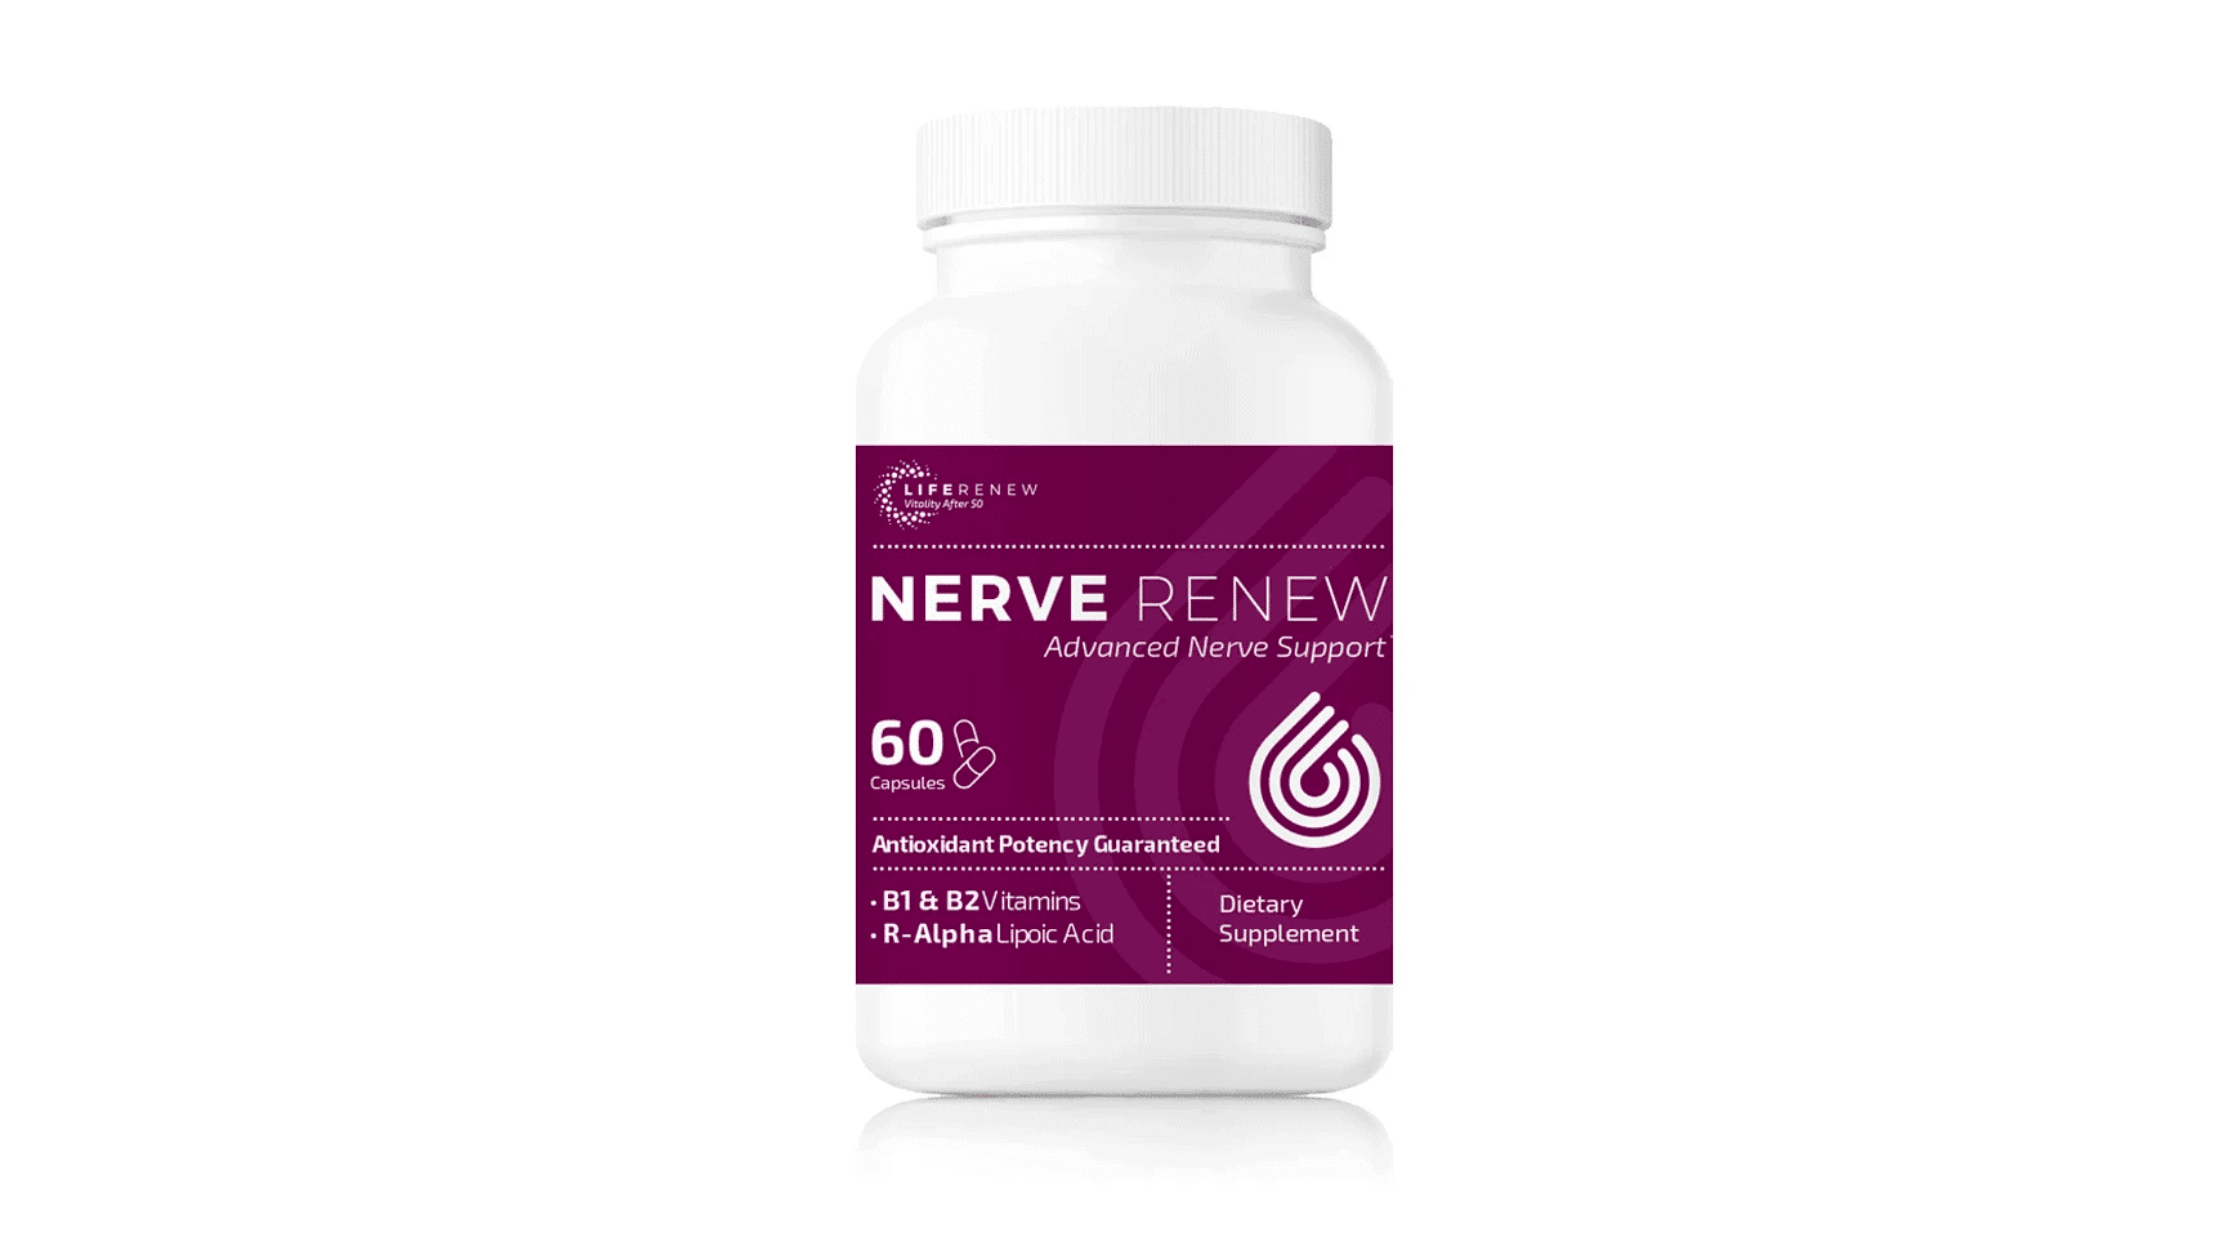 Nerve Renew Reviews